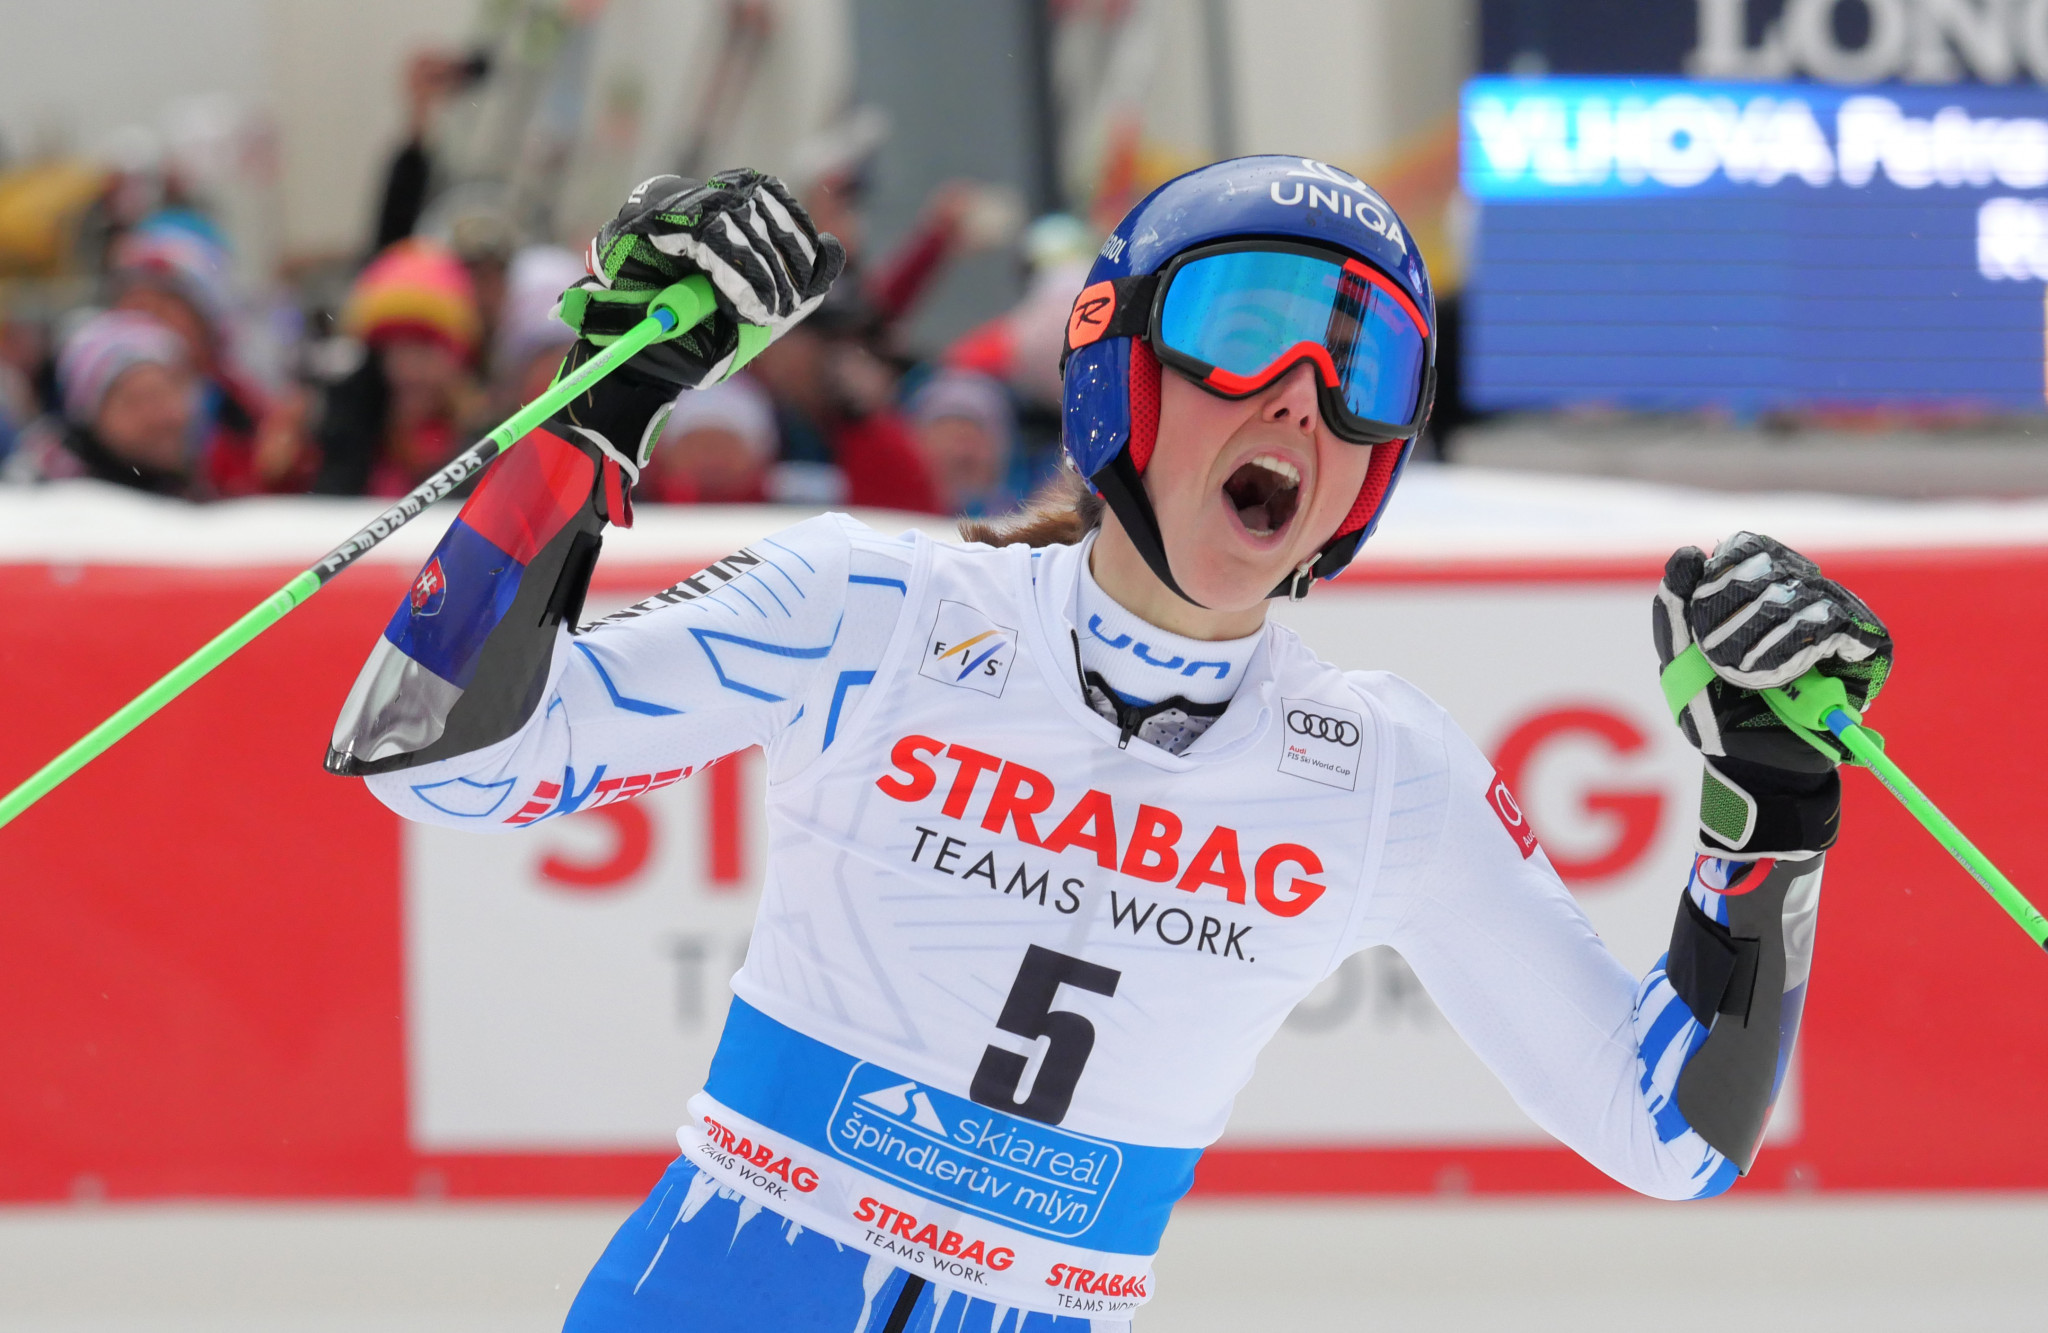 Shiffrin's World Cup giant slalom ambitions checked as Vlhova wins in Špindlerův Mlýn